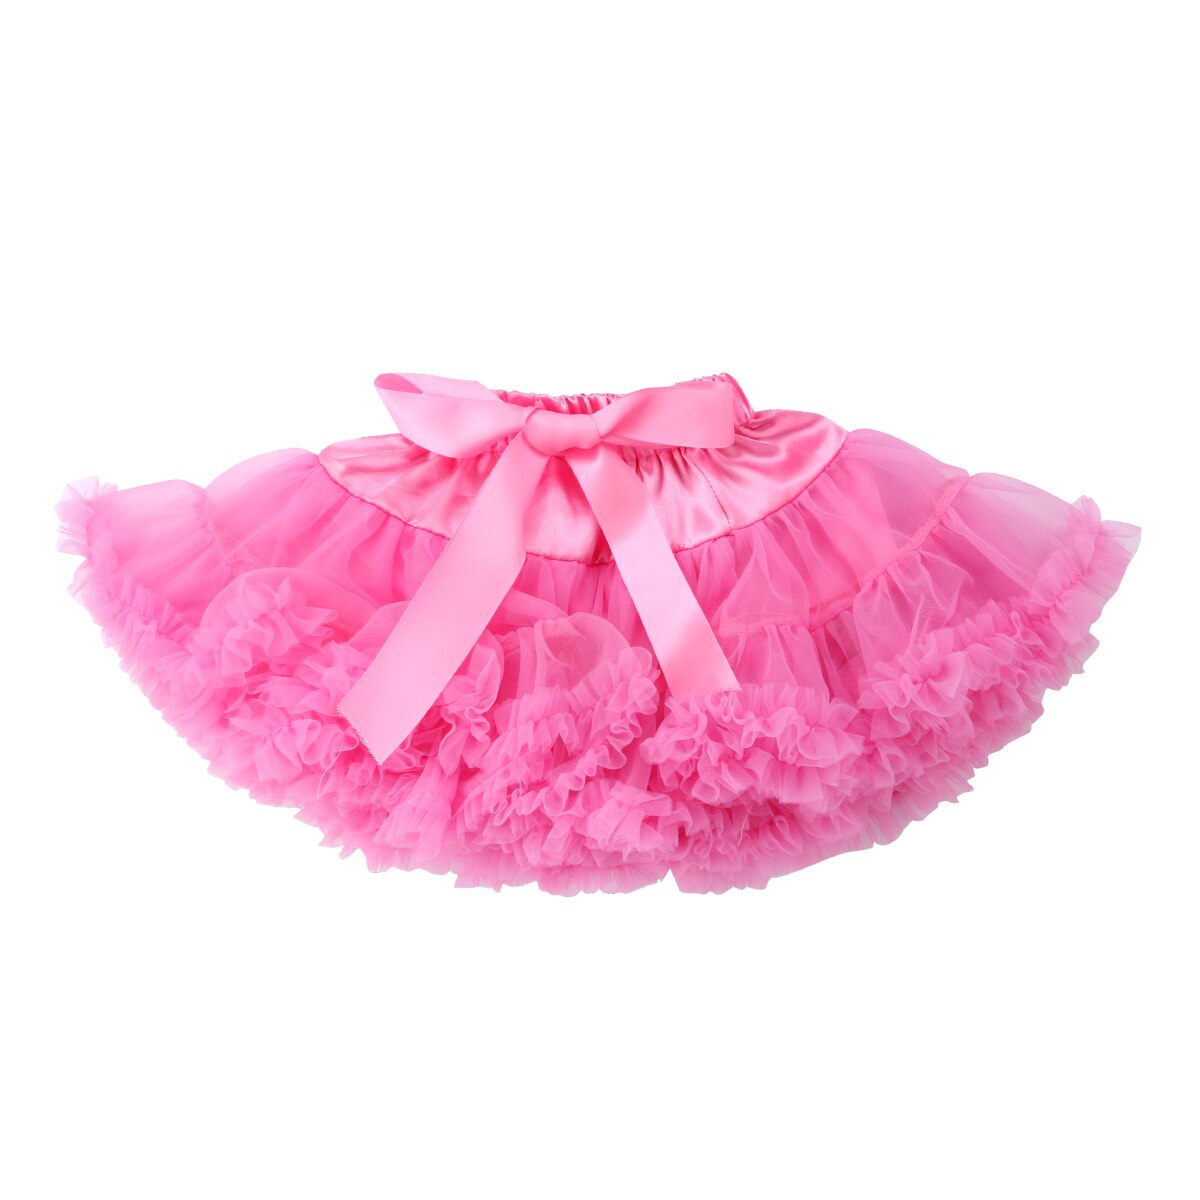 Baby børn piger sommer fluffy tutu kjole nederdel prinsesse fødselsdagsfest underkjole ballet dancewear nederdel 0-24m: Blå